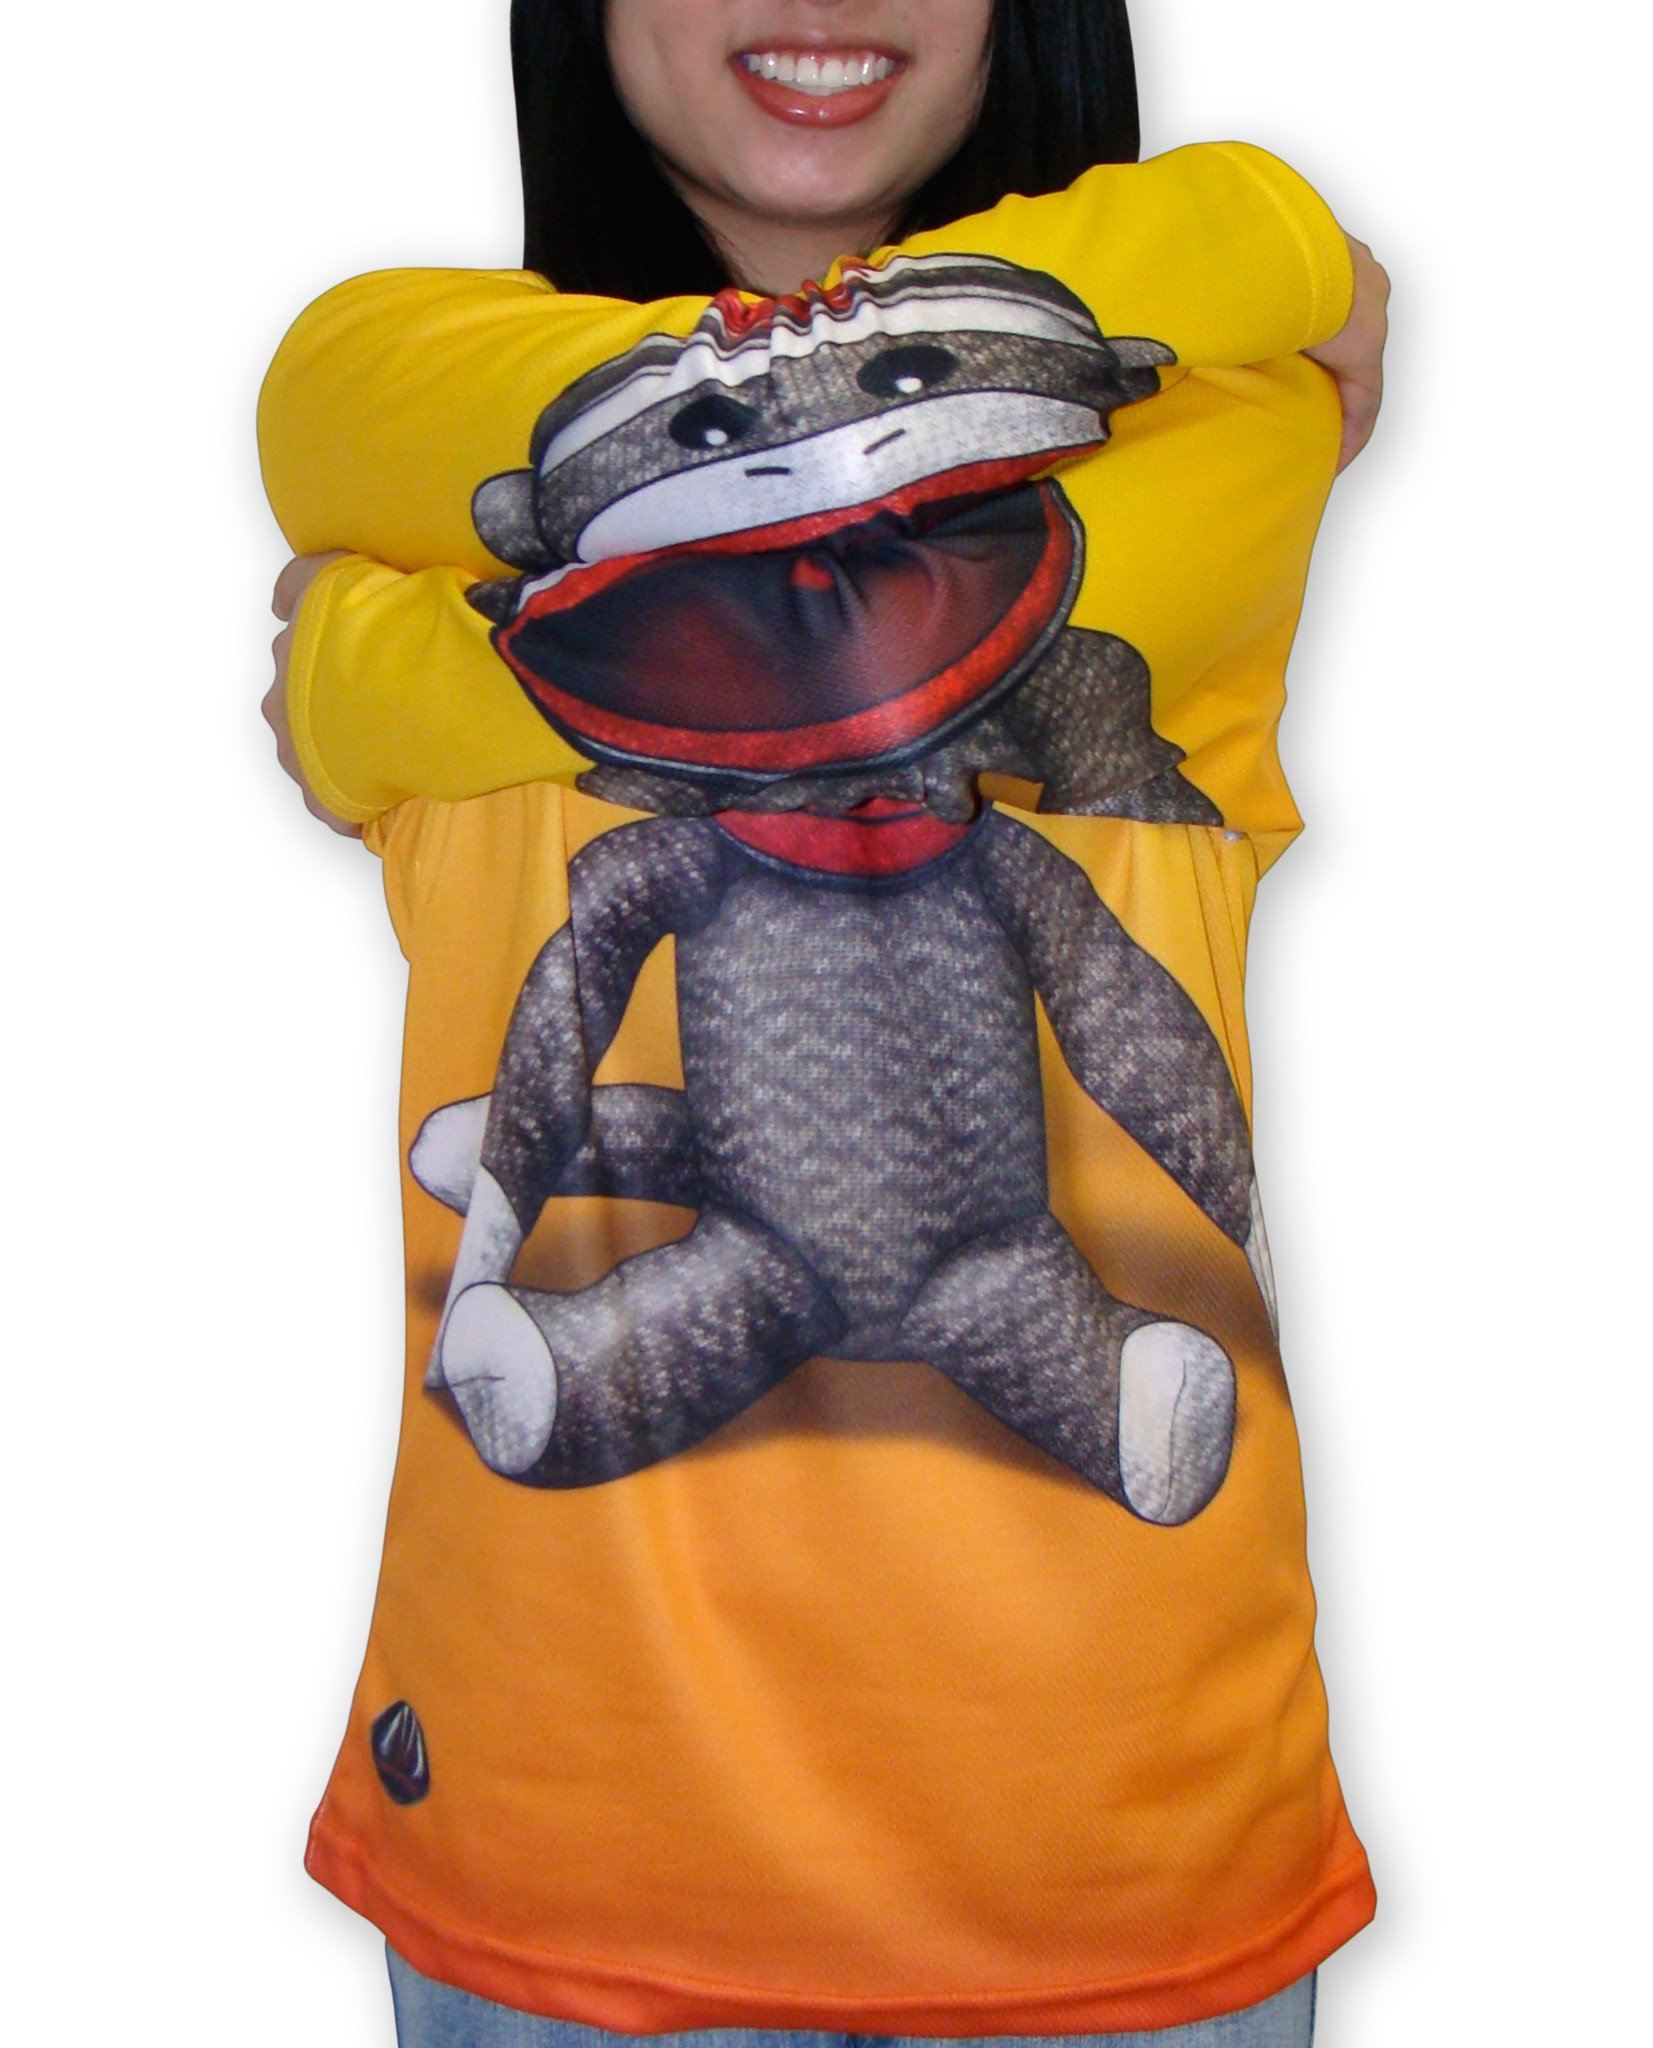 SOCK MONKEY Hoodie Chomp Shirt by MOUTHMAN® Kid's Clothing 